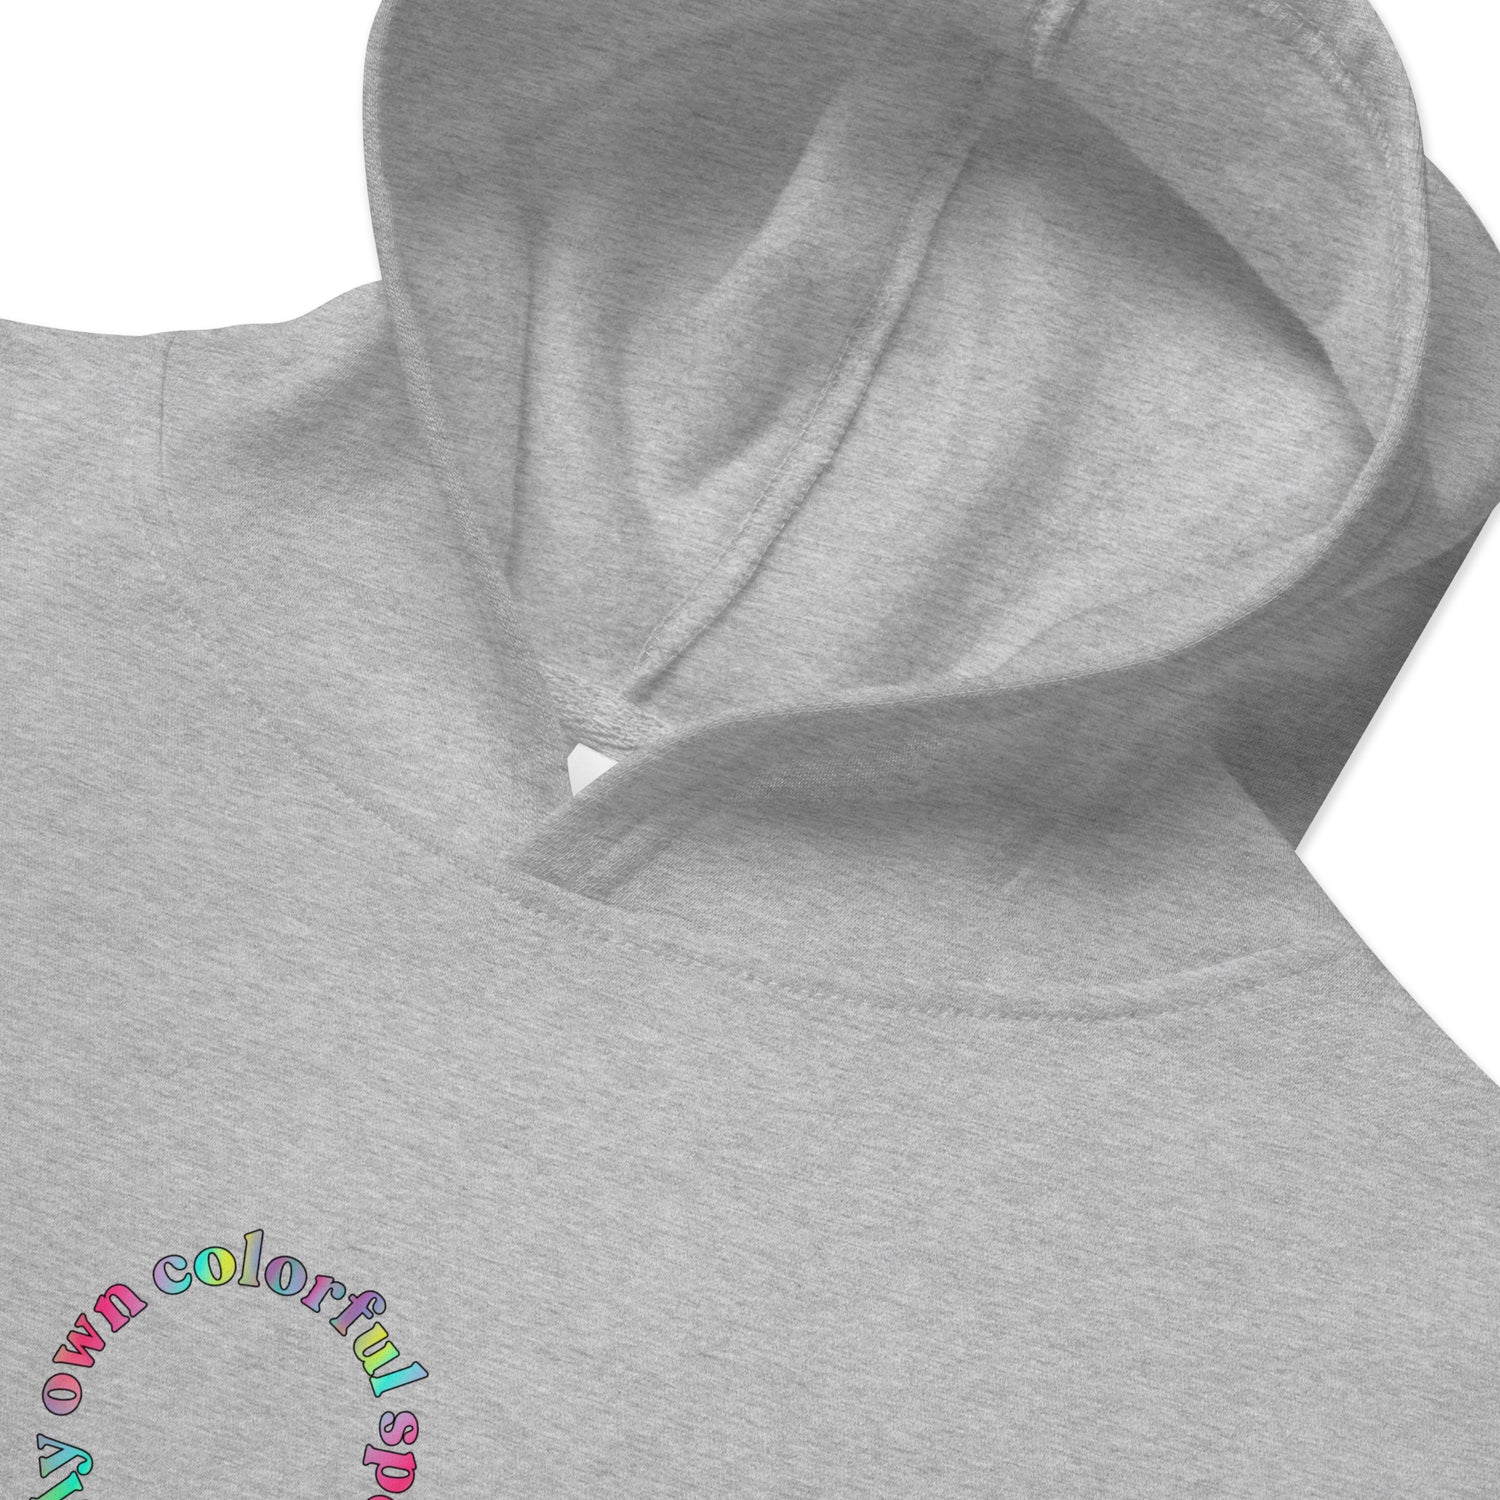 Closeup of Grey Kidswear Hoodie featuring "My own colorful spectrum" printed.